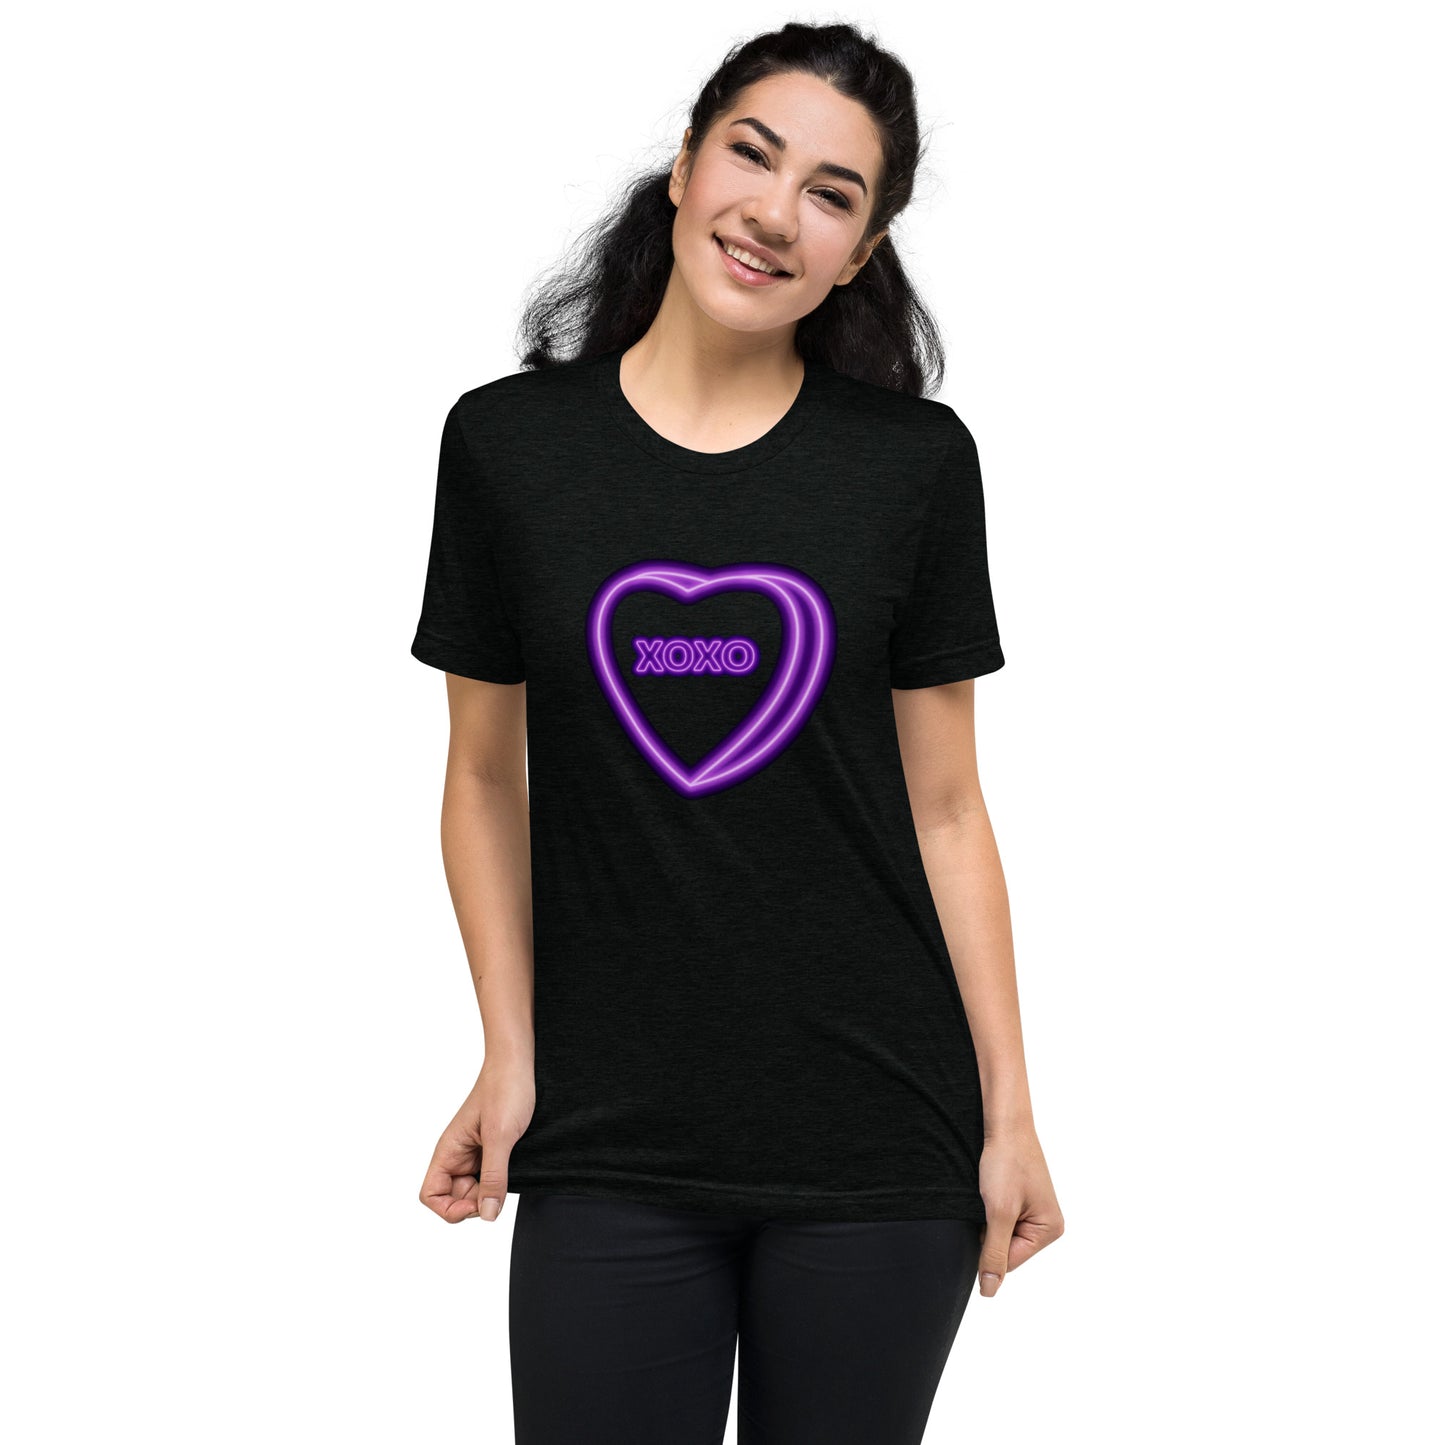 "XOXO" Neon Candy Hearts Short sleeve t-shirt